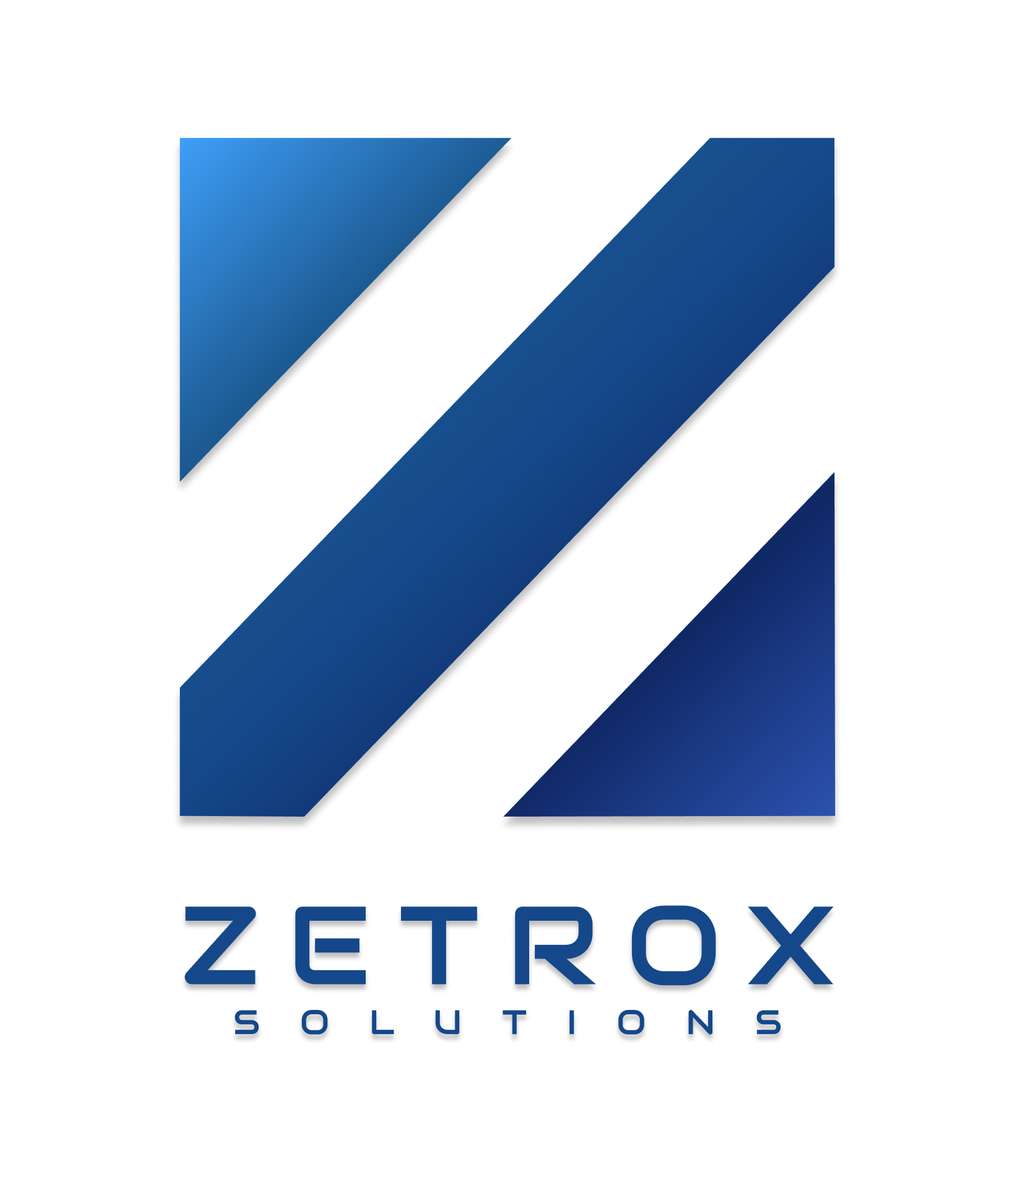 tecnologia zetrox puzzle online a partir de fotografia